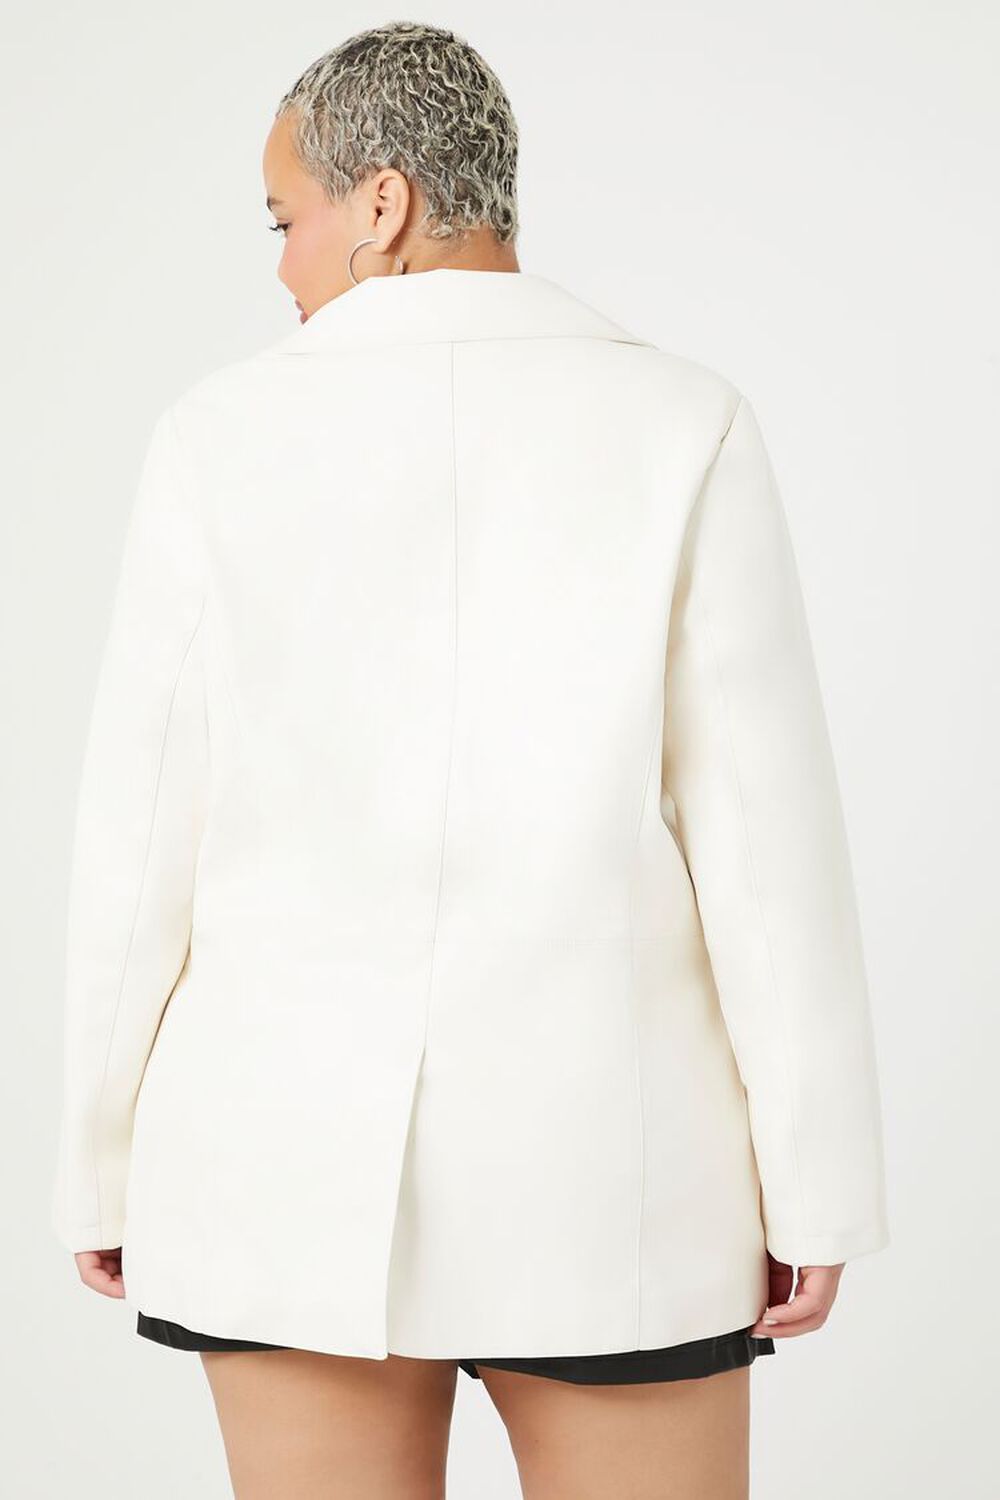 WHITE Plus Size Faux Leather Blazer, image 3